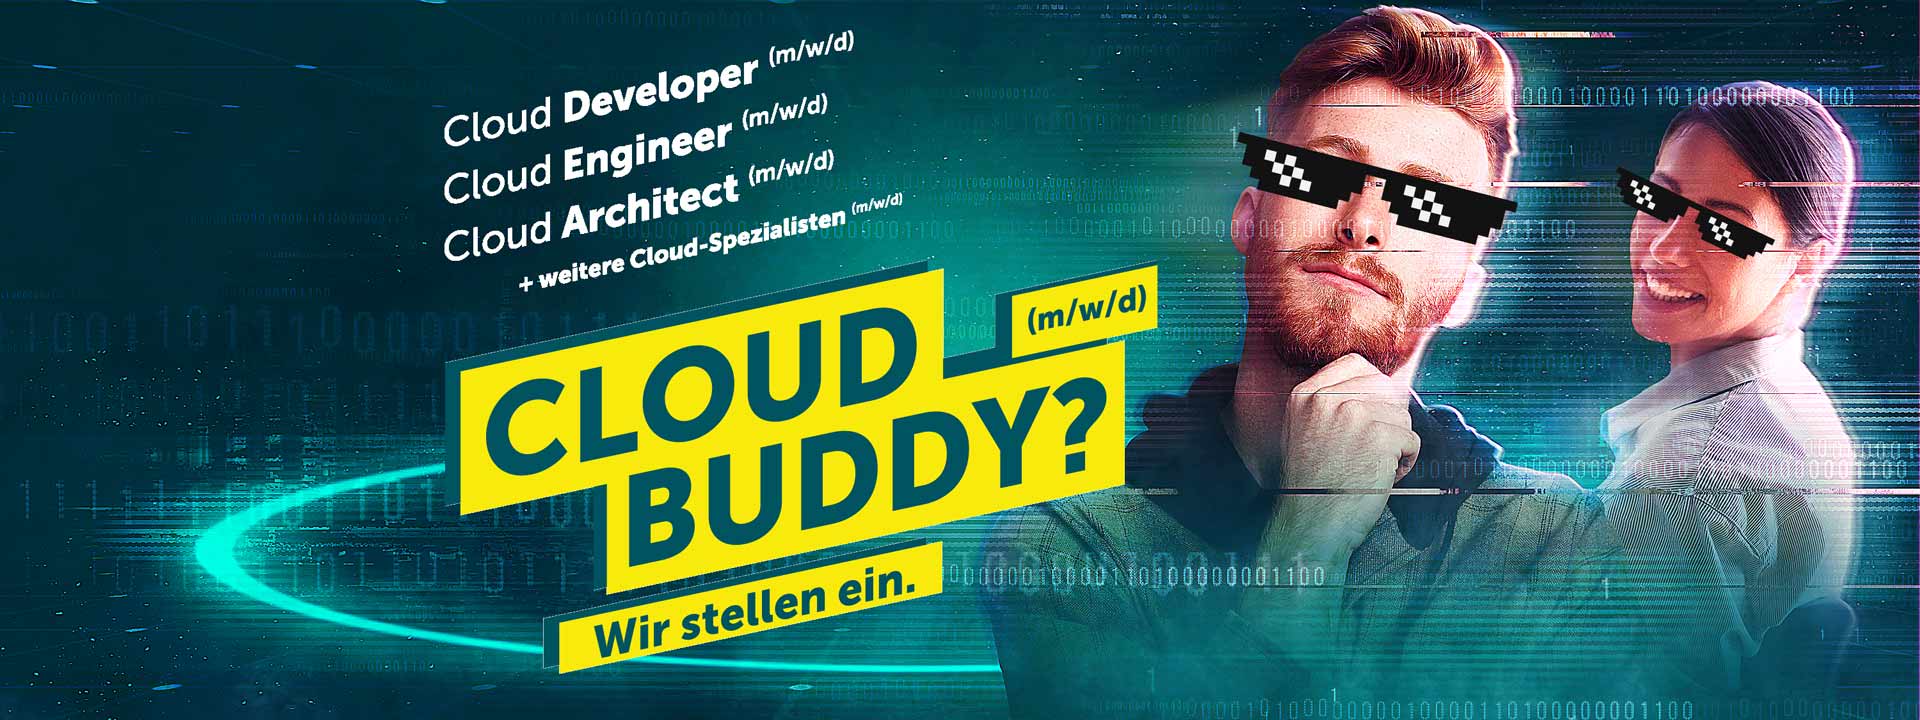 Cloudbuddy We are hiring